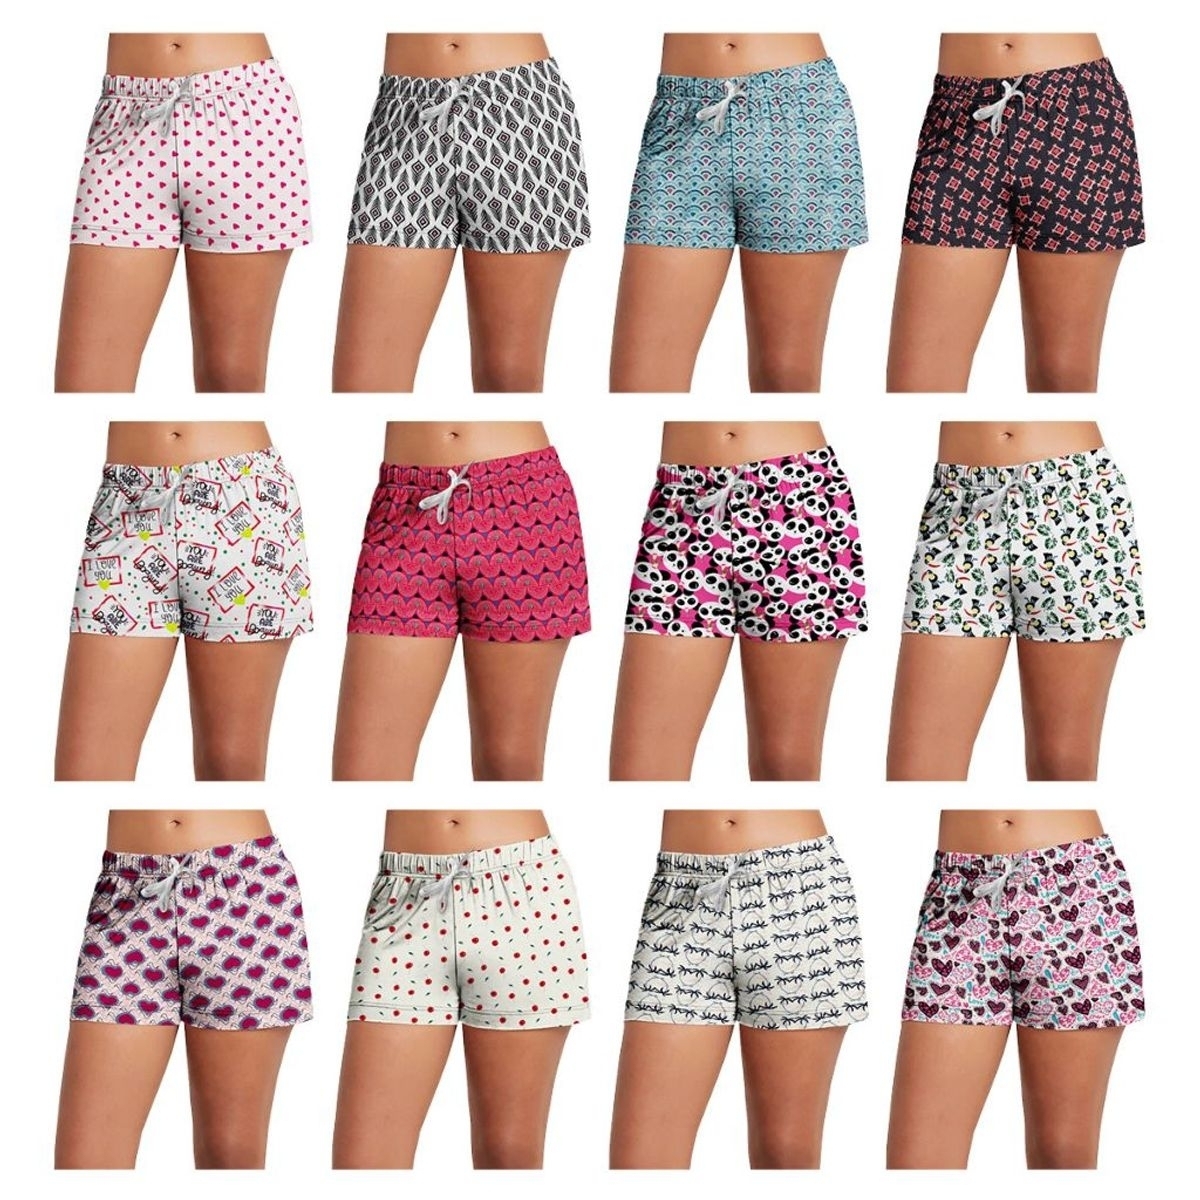 2-Pack: Women's Super-Soft Lightweight Fun Printed Comfy Lounge Bottom Pajama Shorts W/ Drawstring - X-large, Shapes